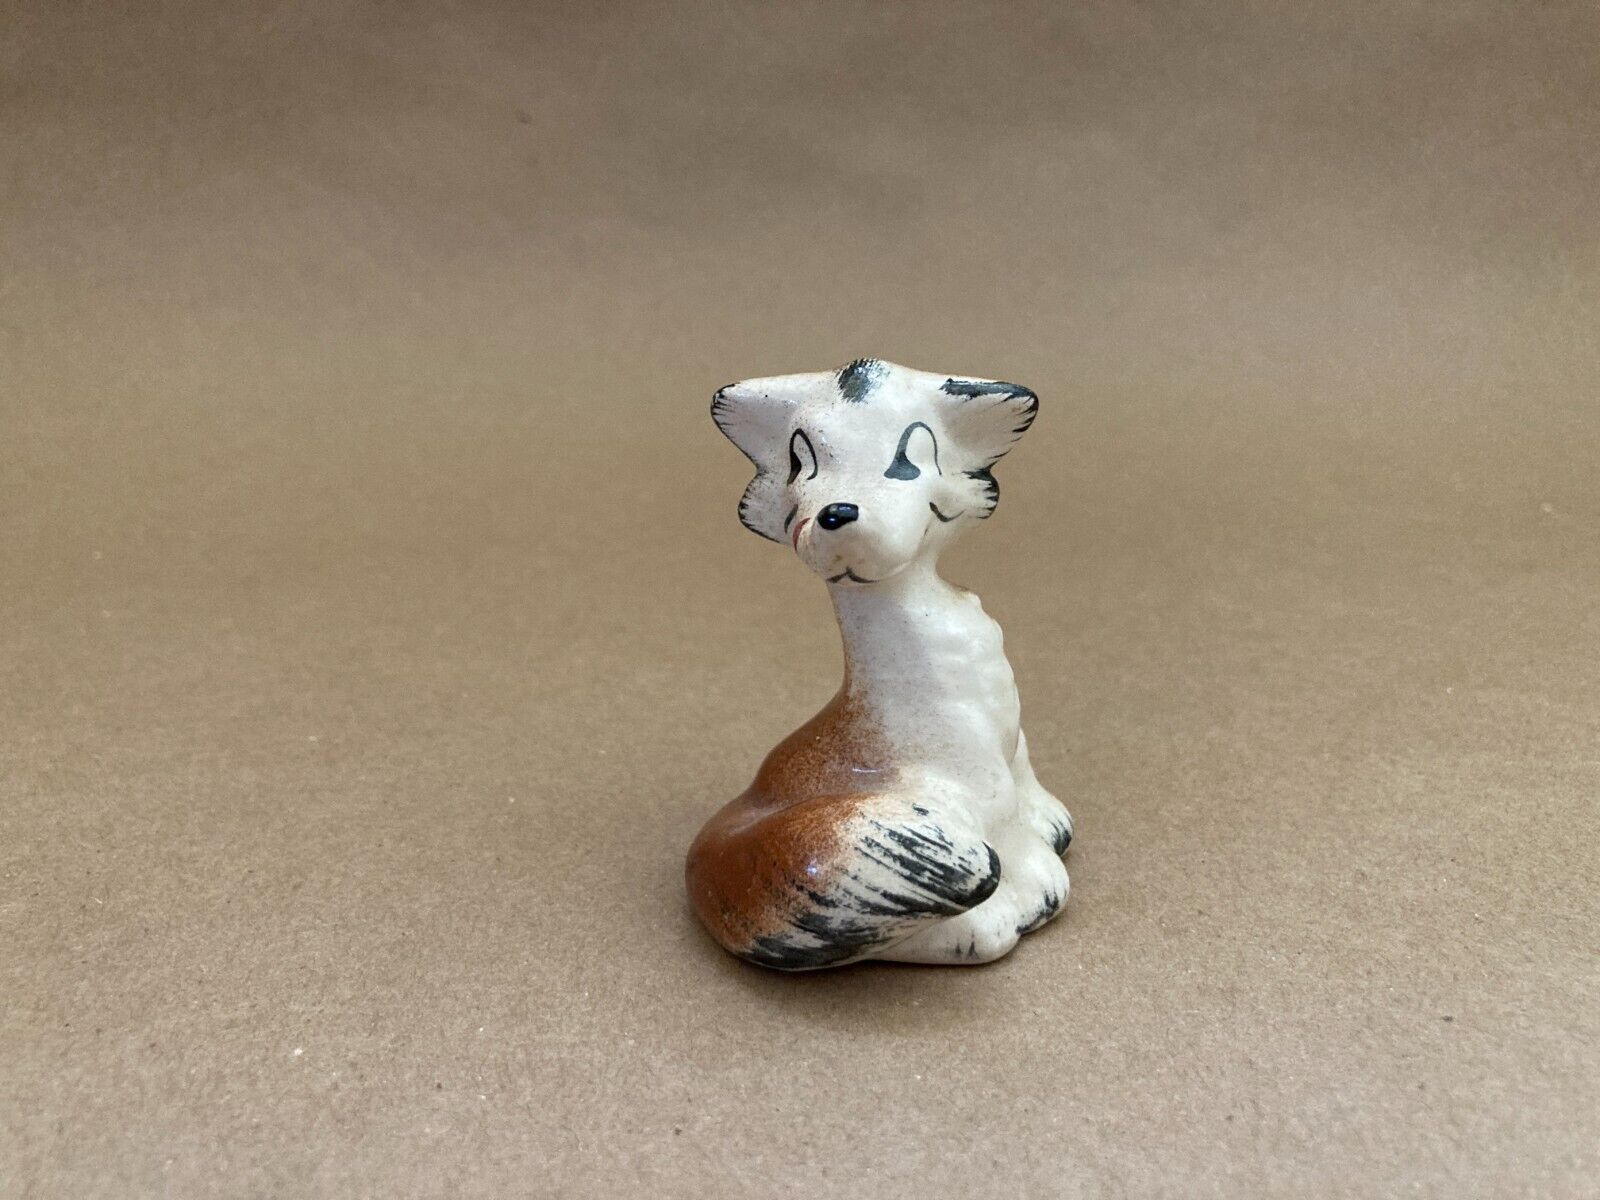 Vintage kitschy smiling mischievous porcelain fox figurine knick knack